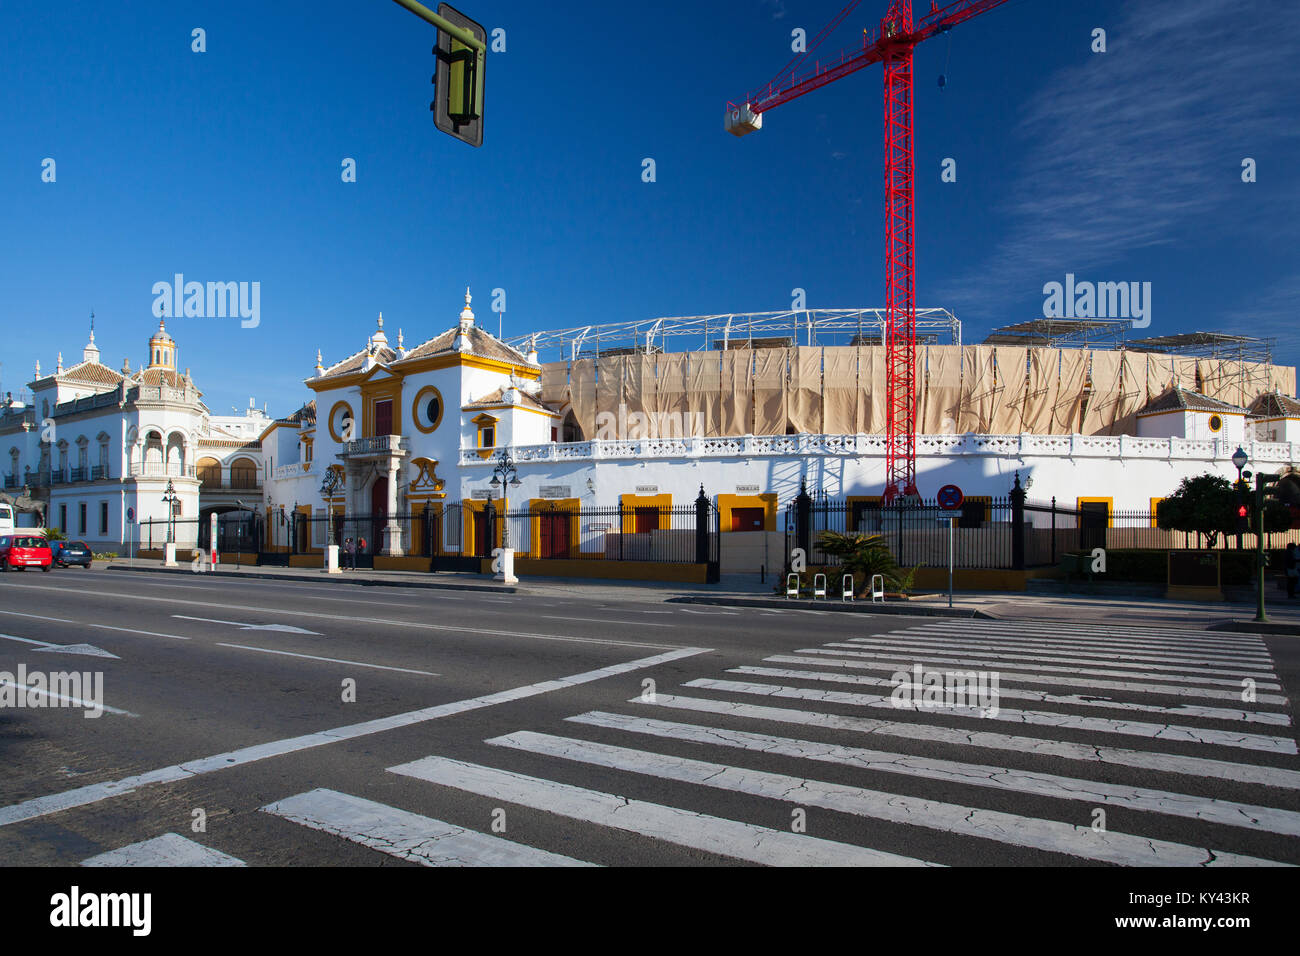 Seville, Spain - November 19,2016: Bullfight arena, plaza de toros at Sevilla.Seville Real Maestranza bullring plaza toros de Sevilla in andalusia Spa Stock Photo